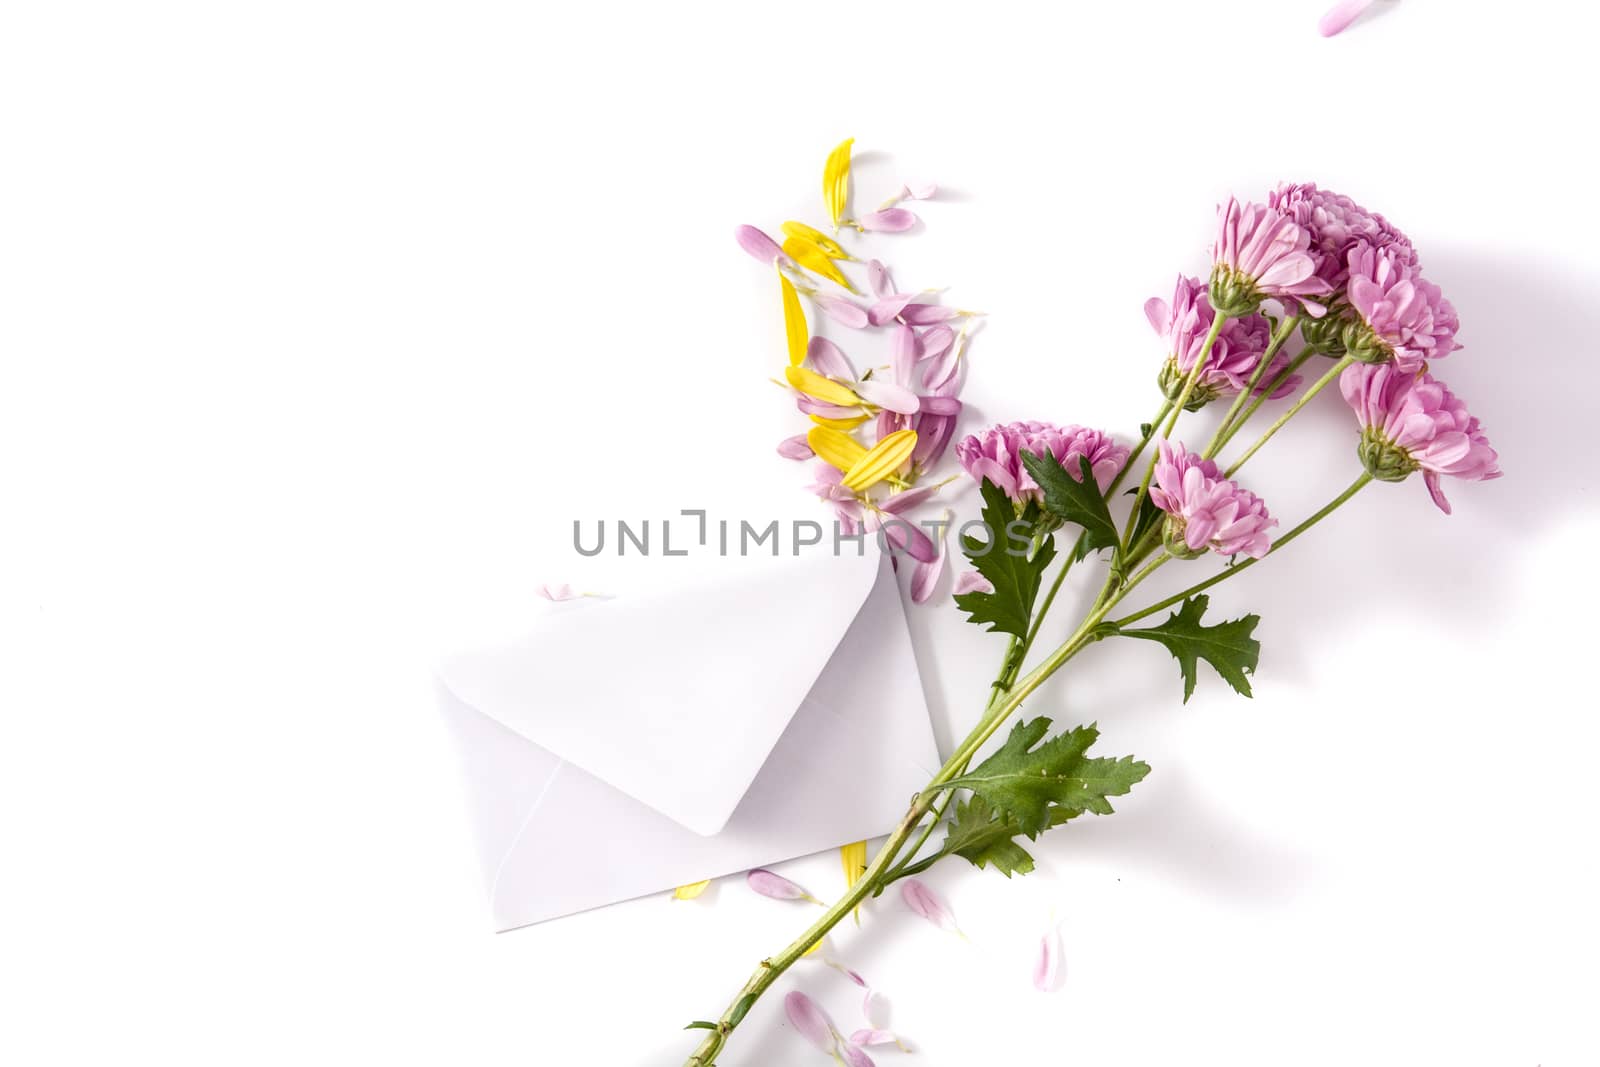 Purple chrysanthemum, petals and paper envelope by chandlervid85